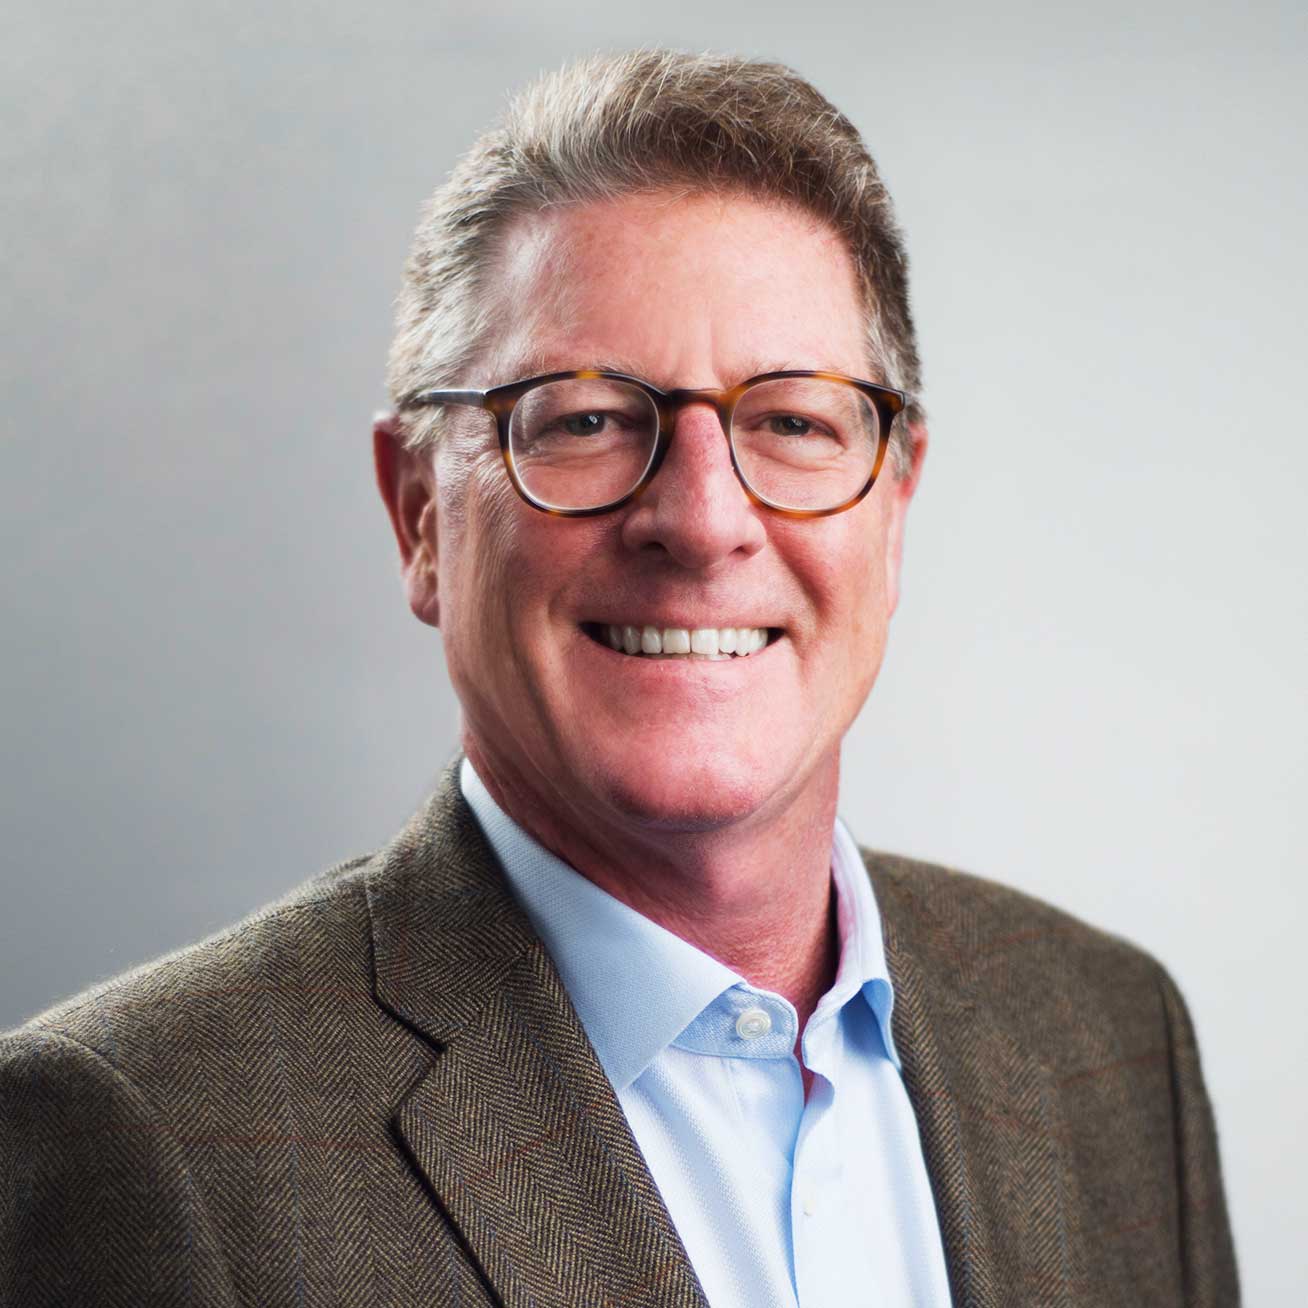 Lamar Advertising CEO Sean Reilly Talks Transformation & Growth on Next ‘Business Forum’ | Arkansas Business News